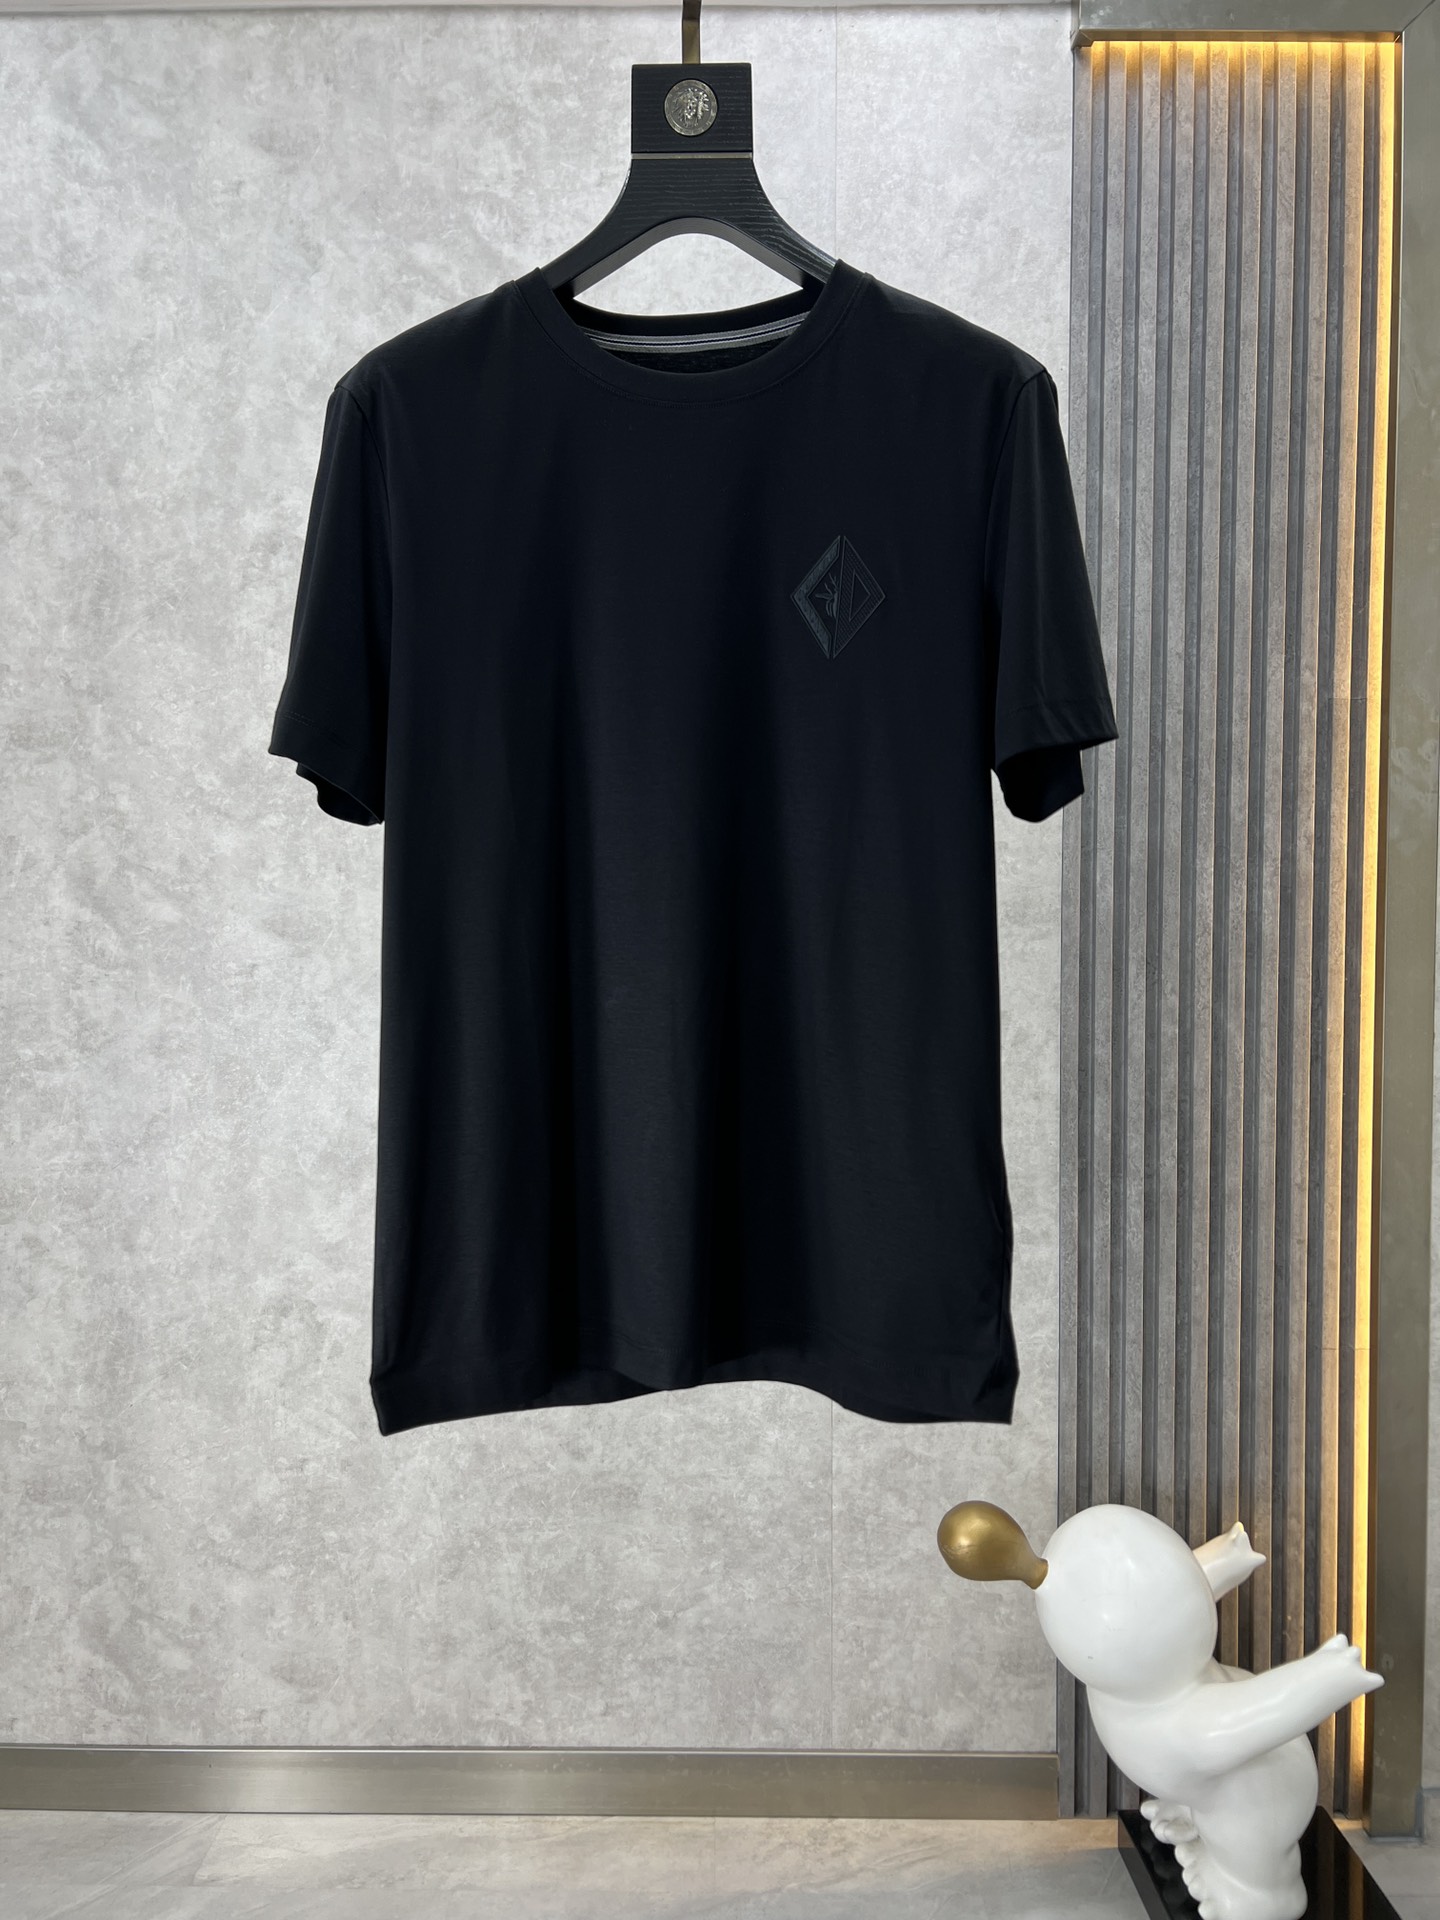 Dior Shop
 Clothing T-Shirt Men Summer Collection Fashion Short Sleeve